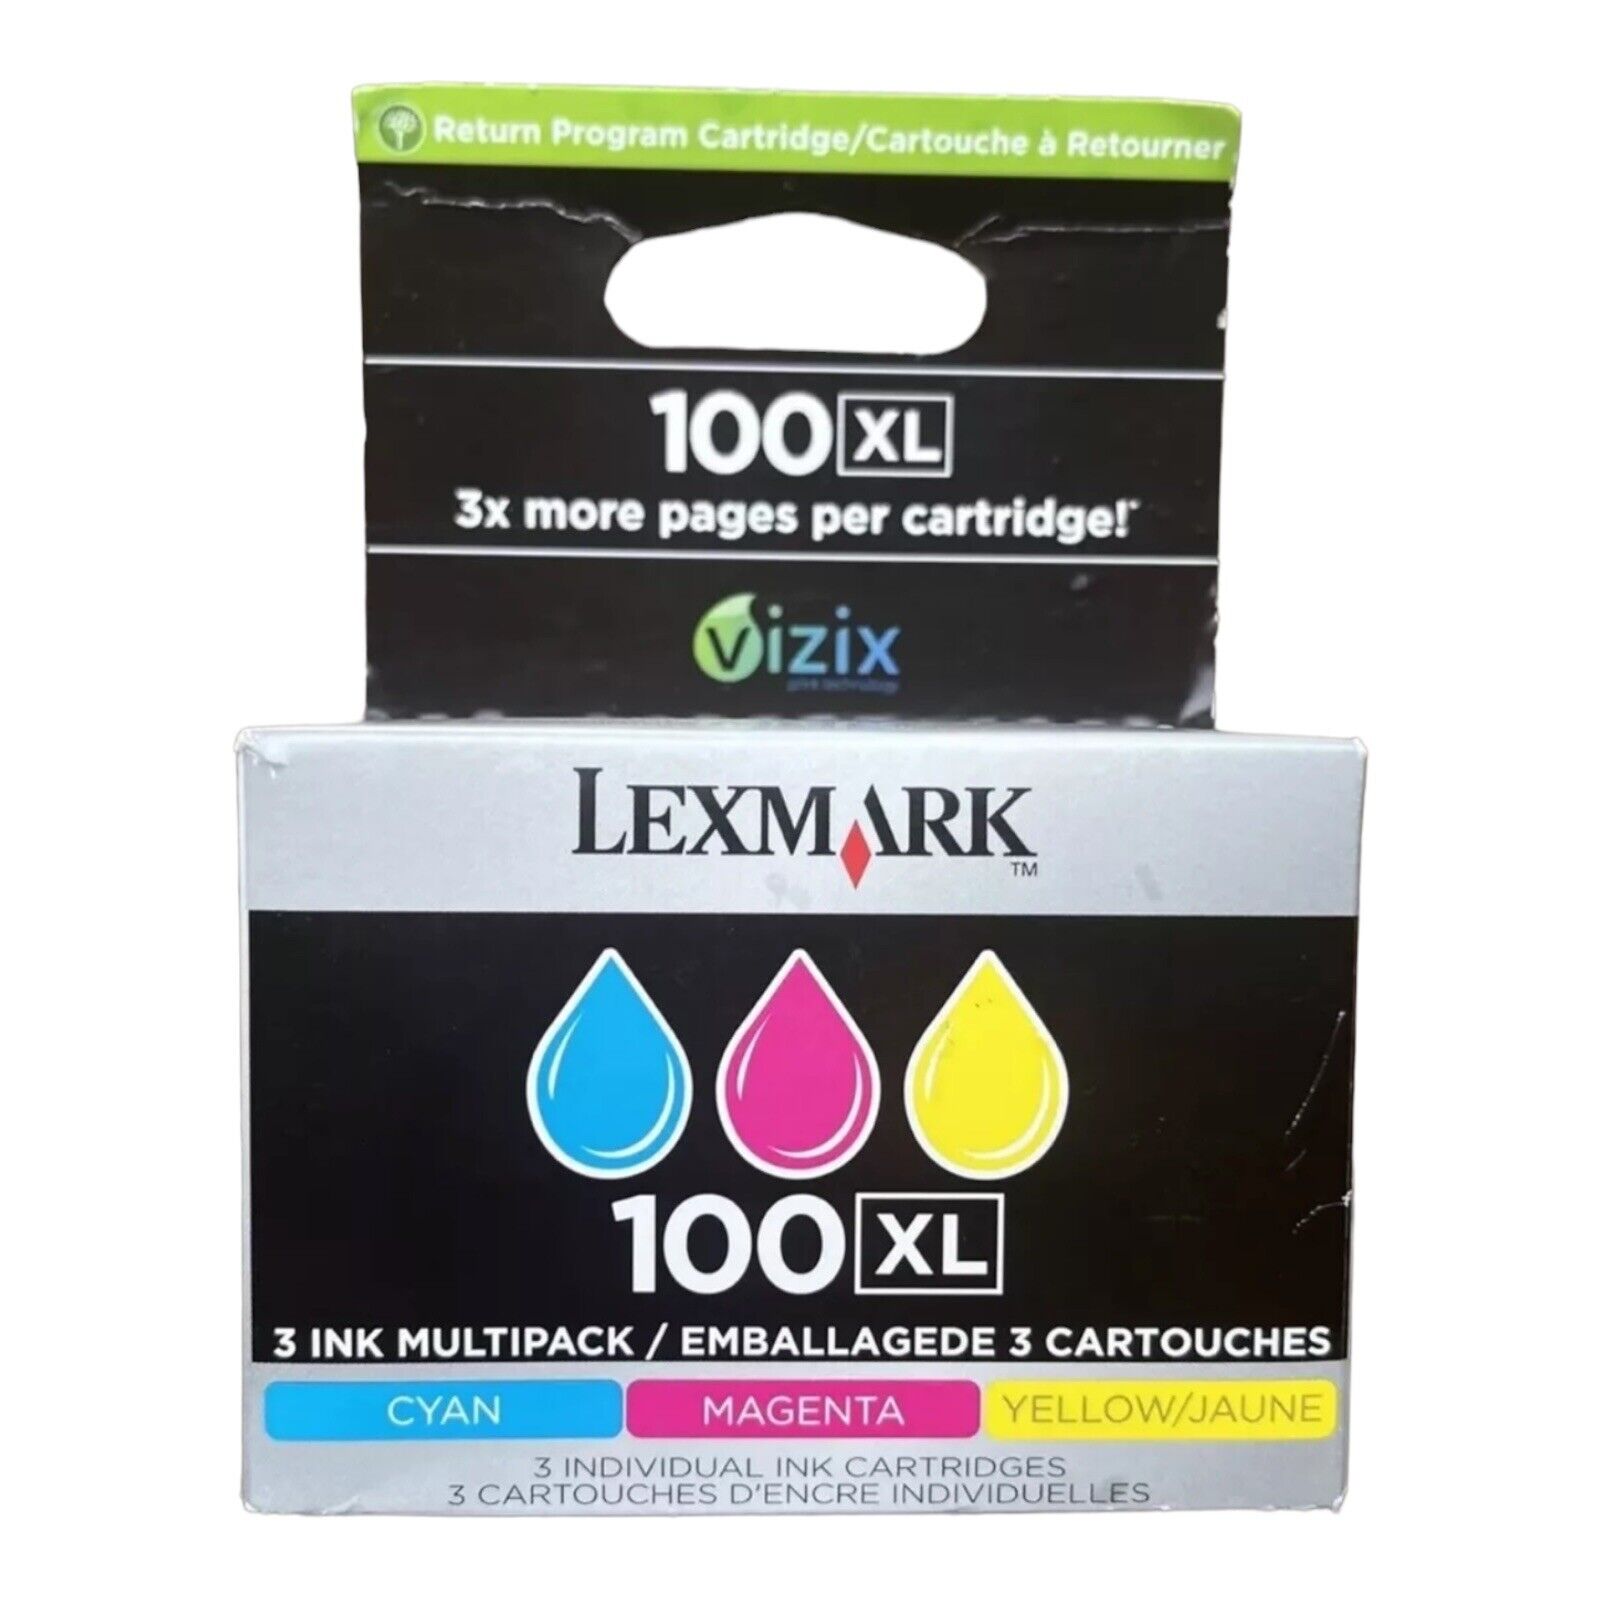 NEW Lexmark 100XL (14N0684) 3 High Yield Inkjet/Ink Cartridge Printer